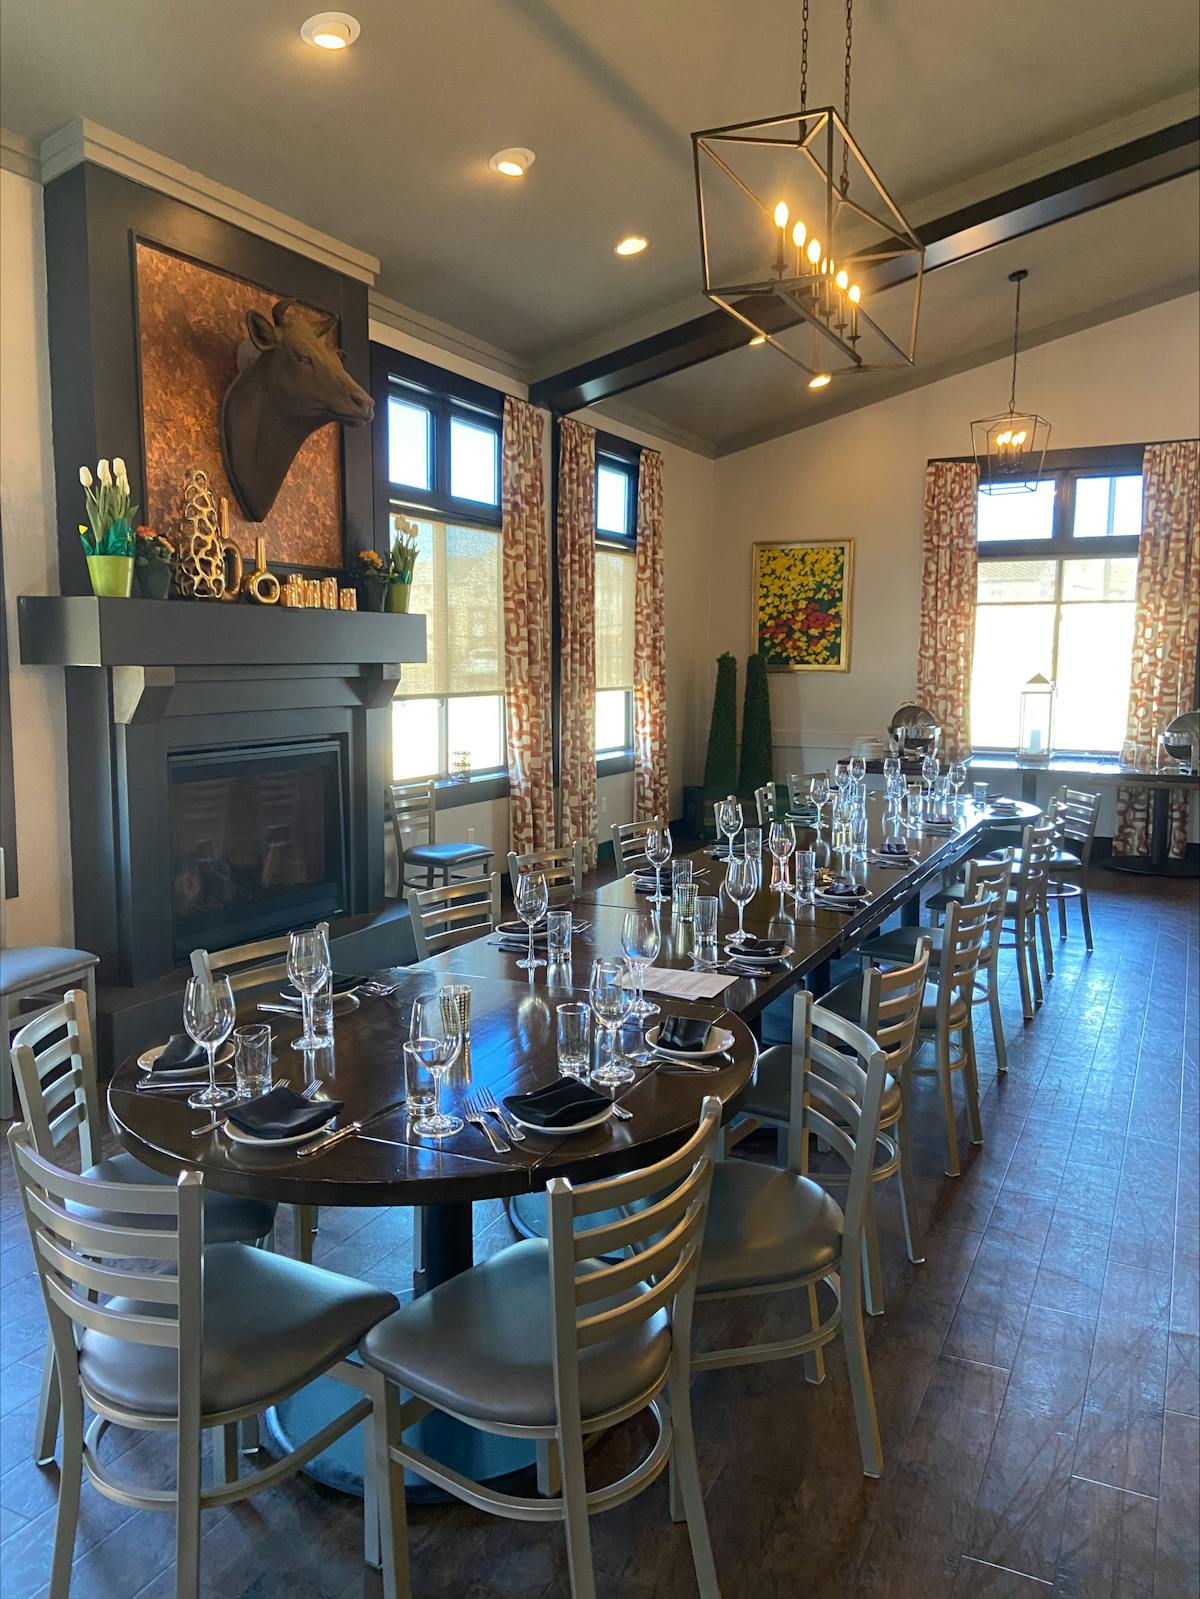 Sunroom | Carbone's Prime | Italian restaurant in Rocky Hill, CT